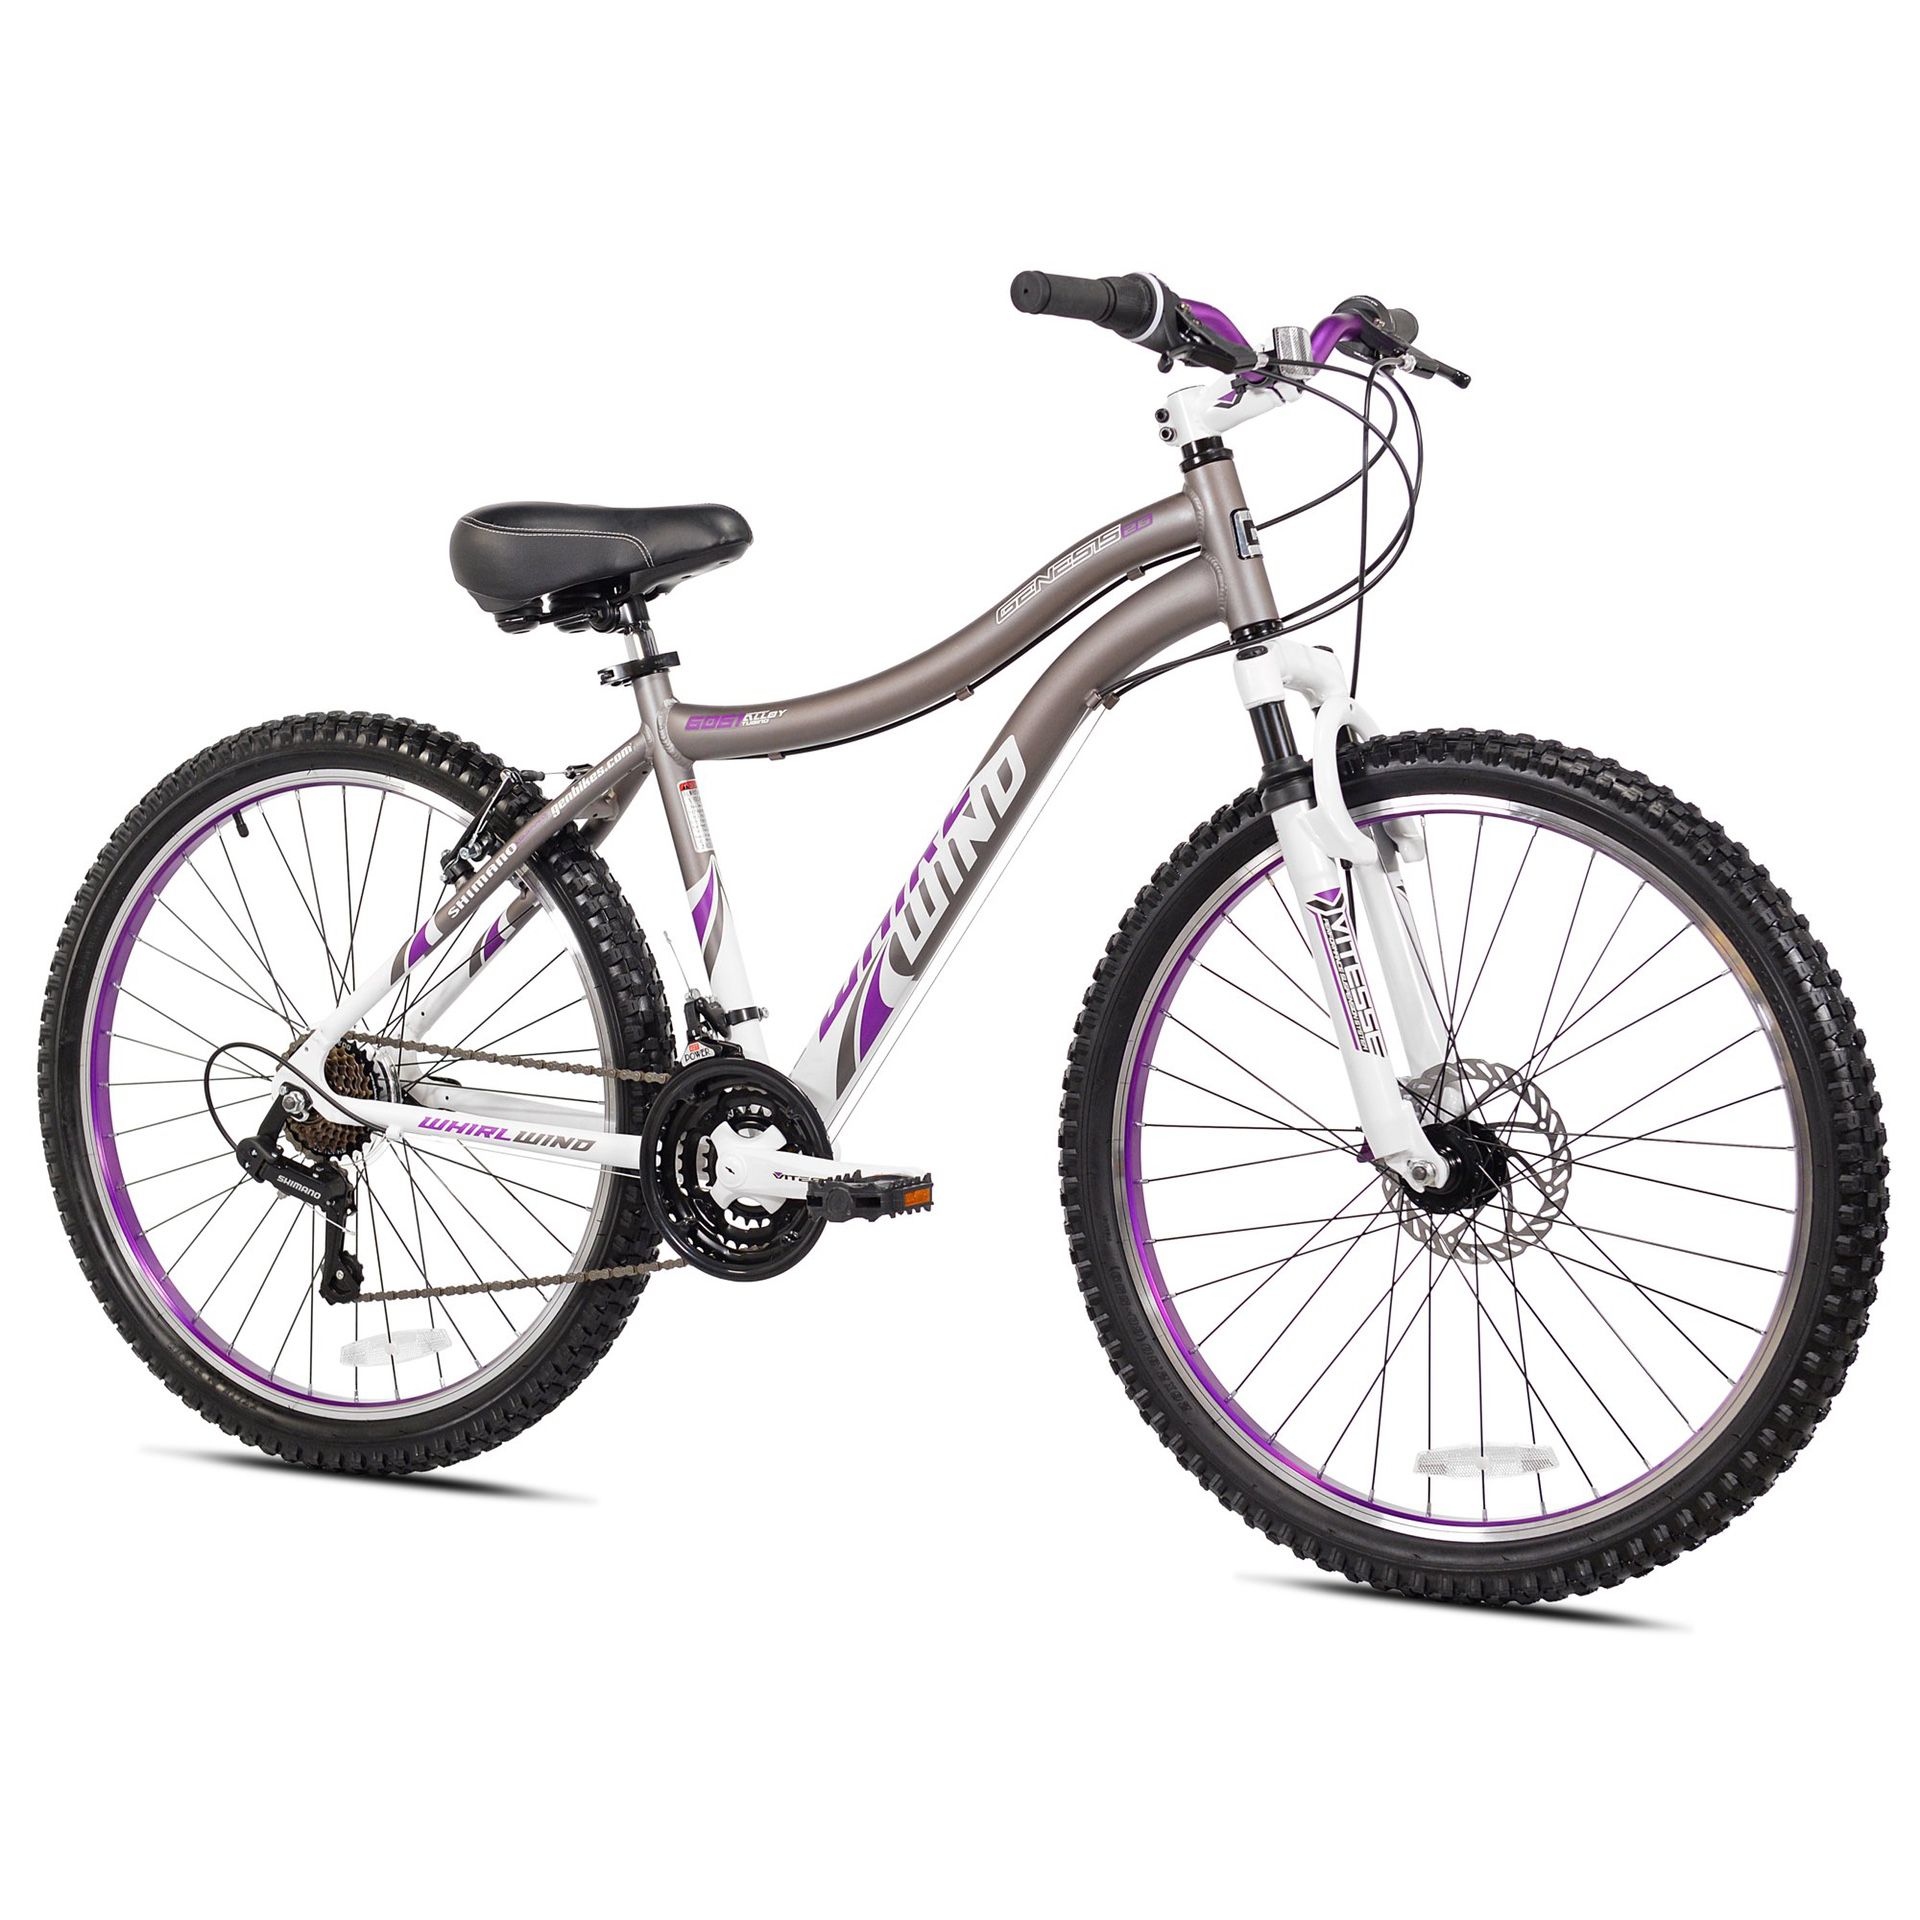 Genesis 26” Whirlwind Women Mountain Bike, Aluminum Frame - Gray